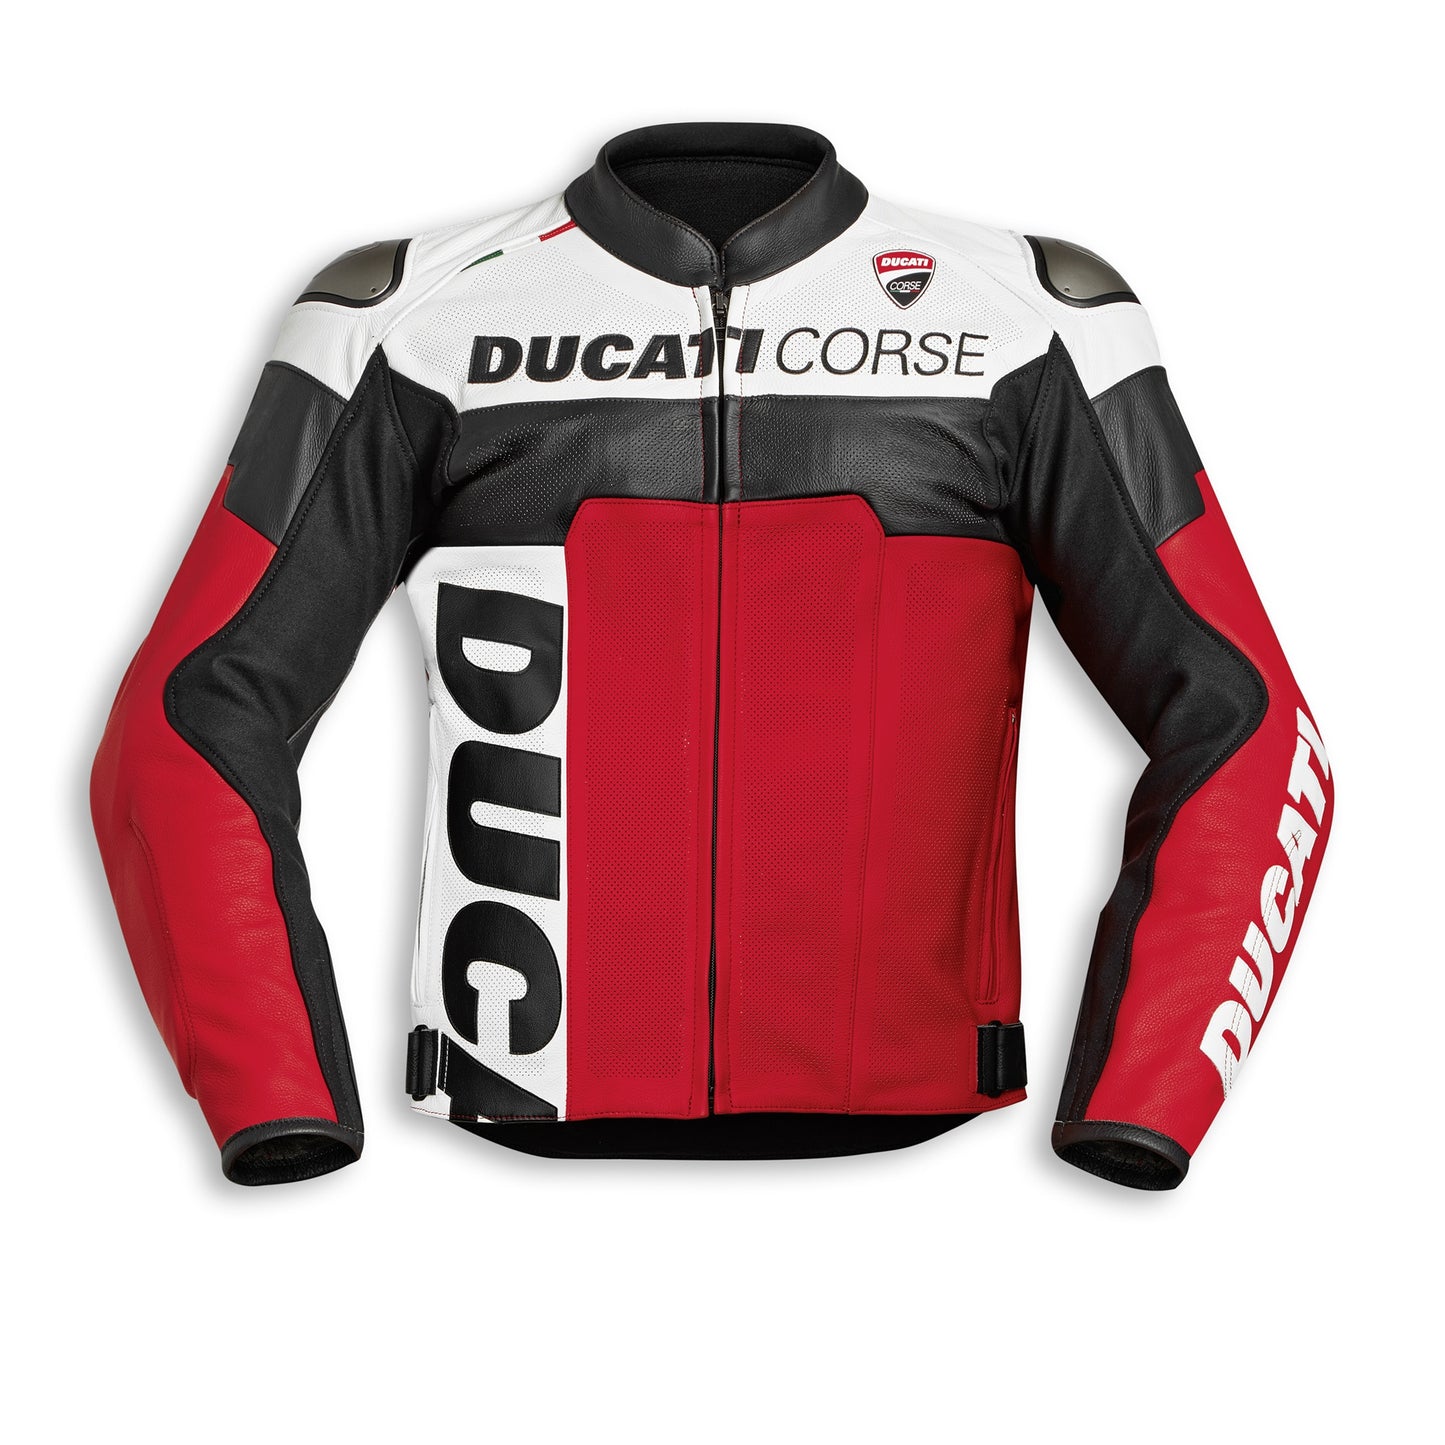 Ducati Corse C5 Leather Jacket